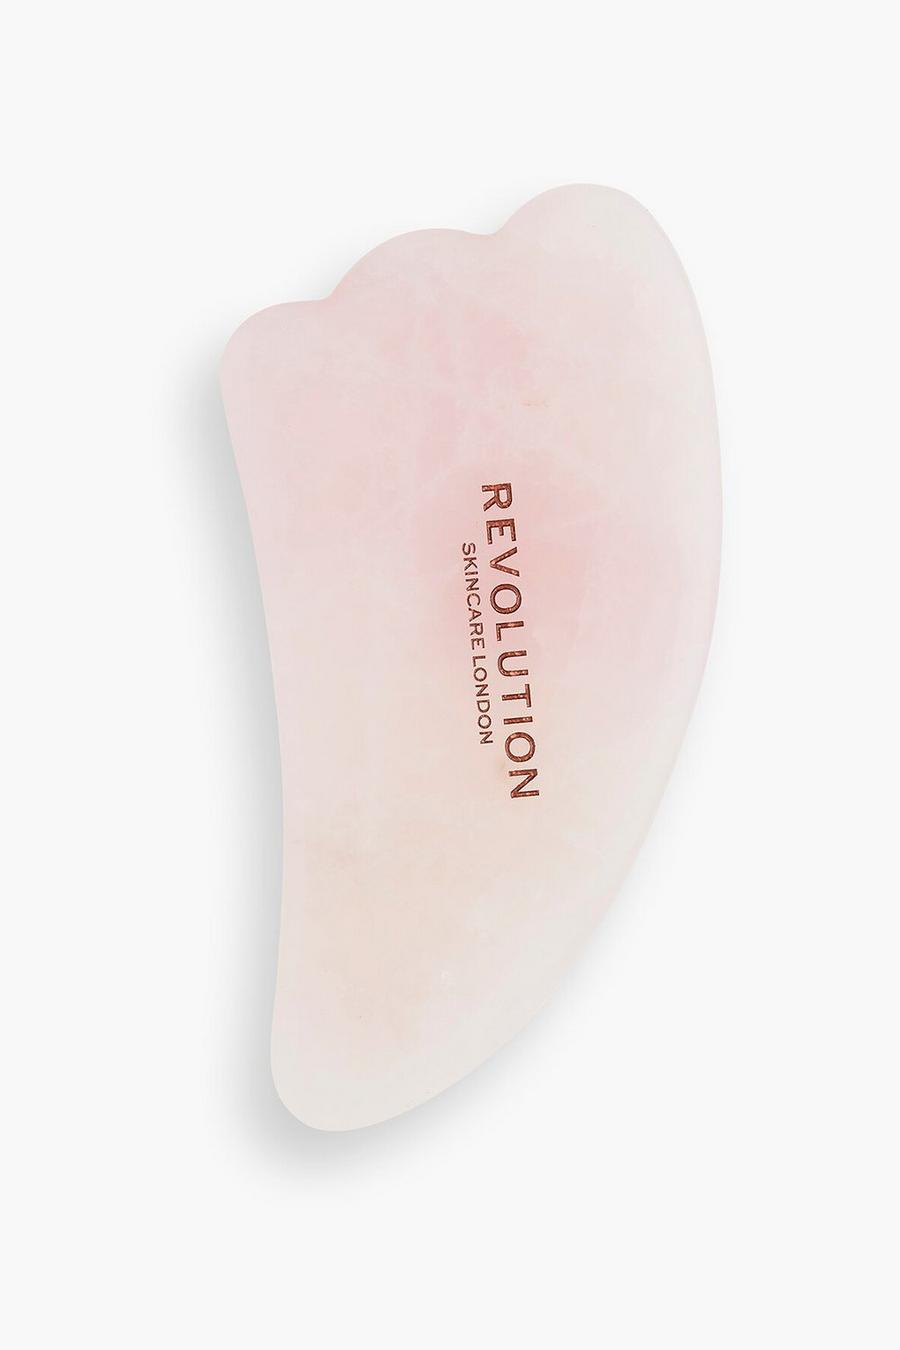 Revolution Skincare - Gua sha en quartz rose, Pink rose